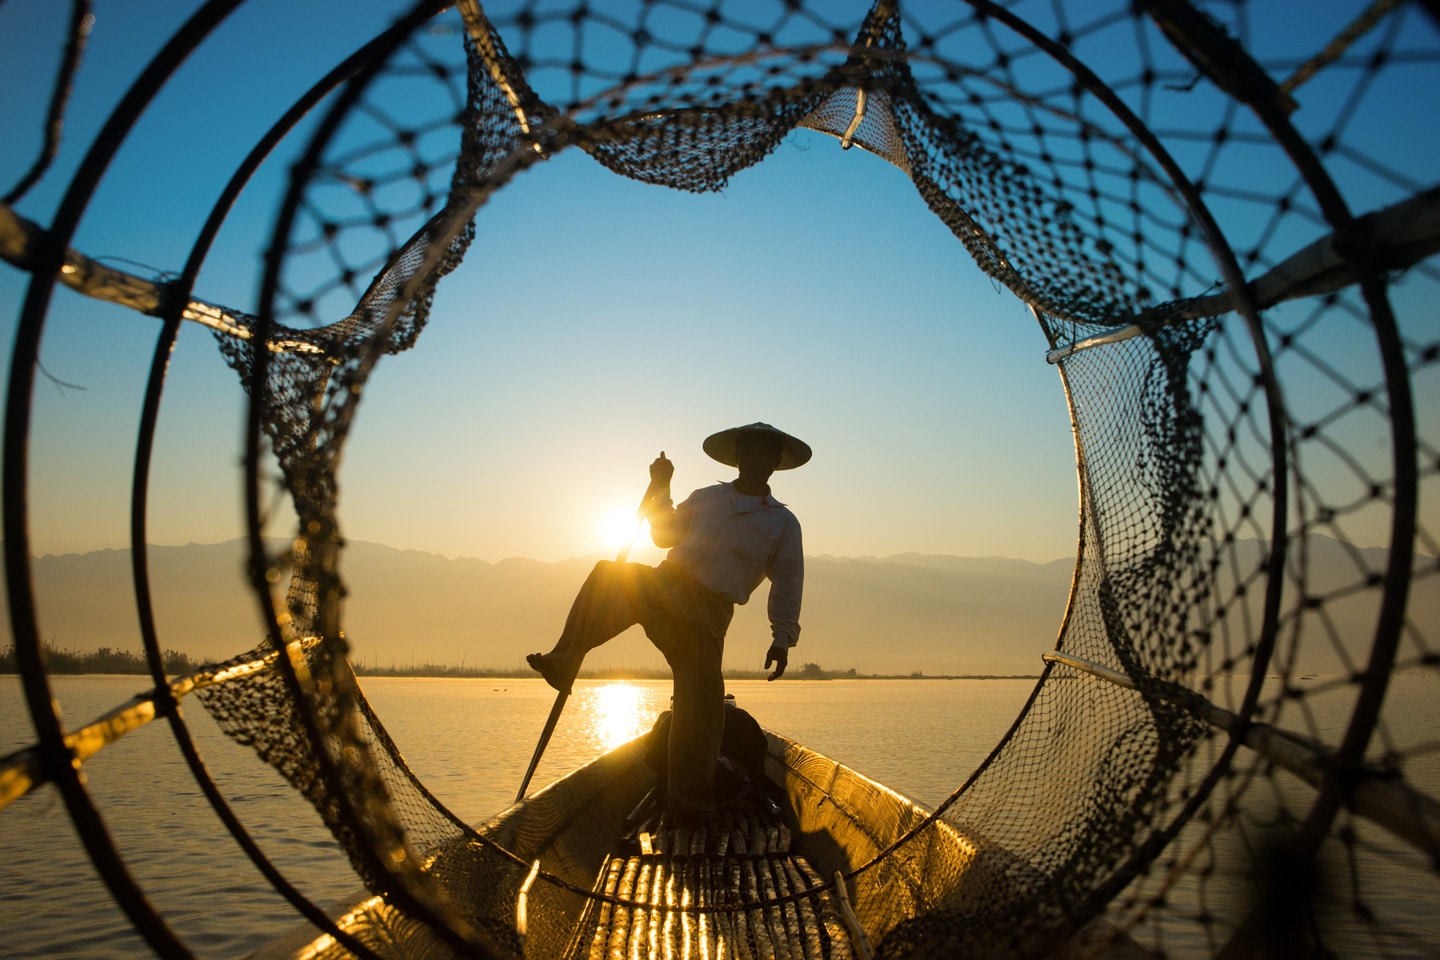 Fisherman shot through a net in Myanmar